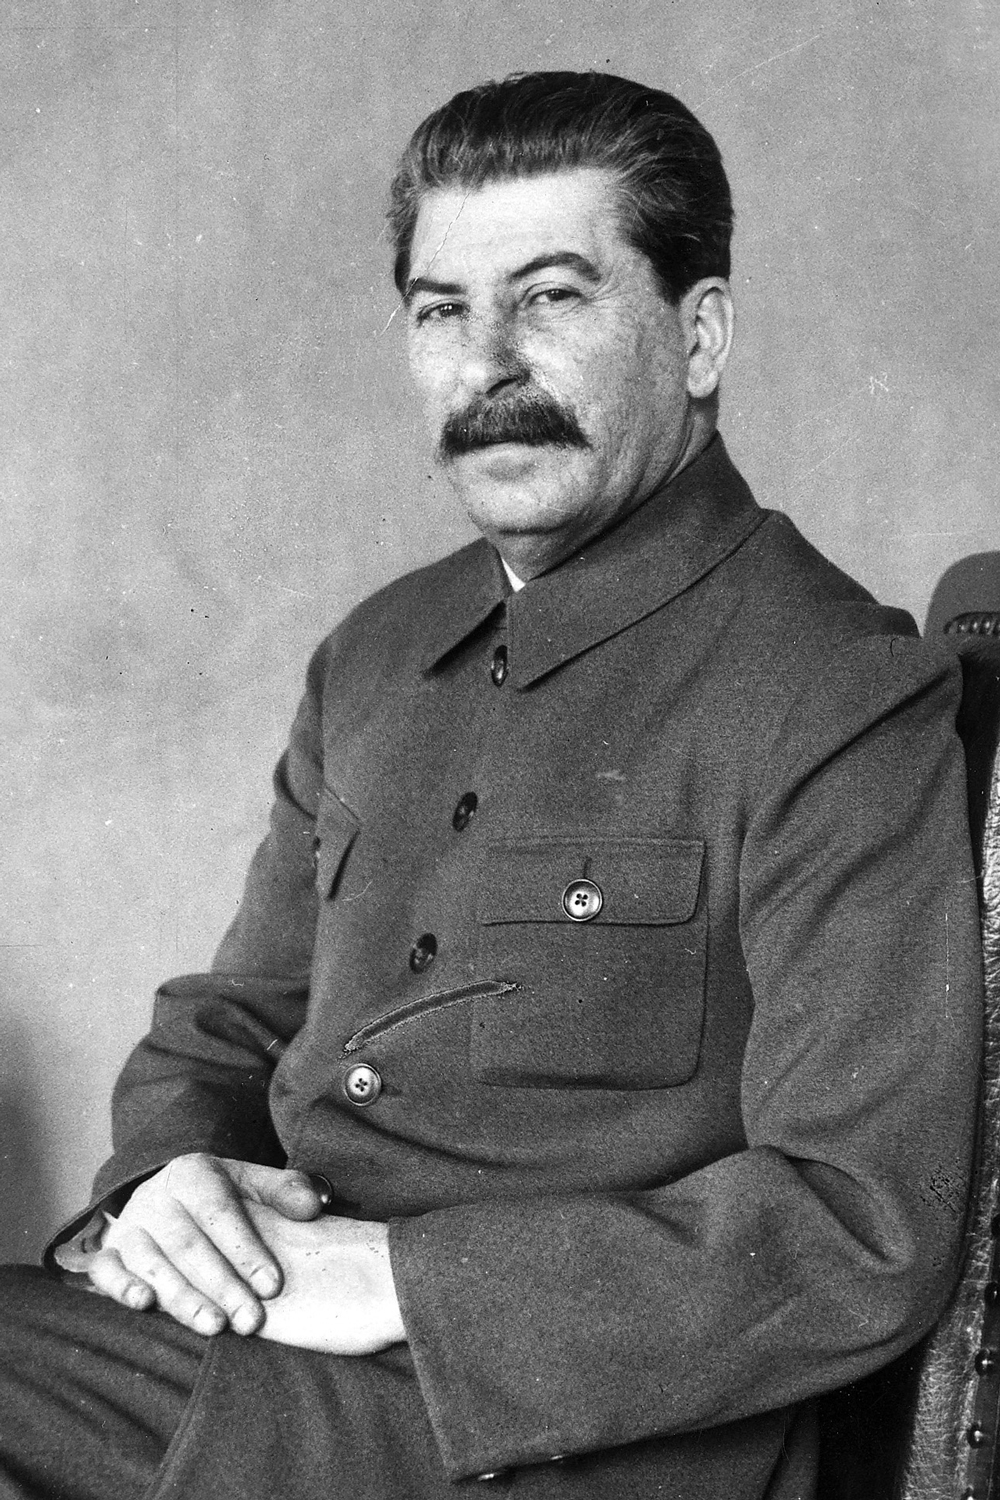 A photo of Joseph Stalin